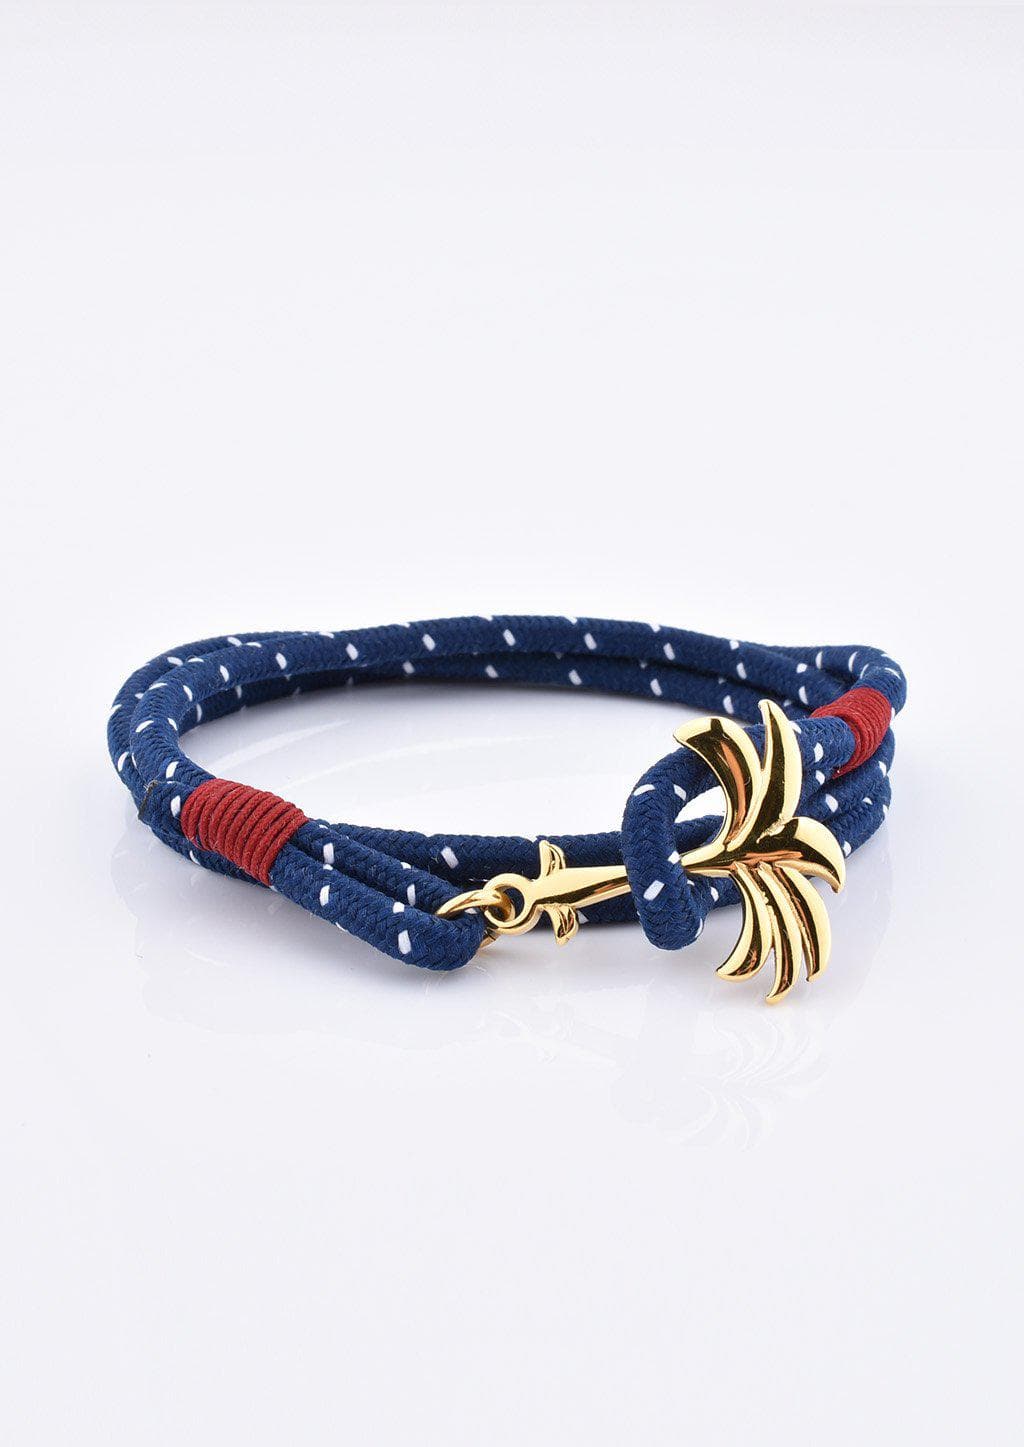 Seven Seas - Triple - Season two Palm anchor bracelet with blue and white nylon band.